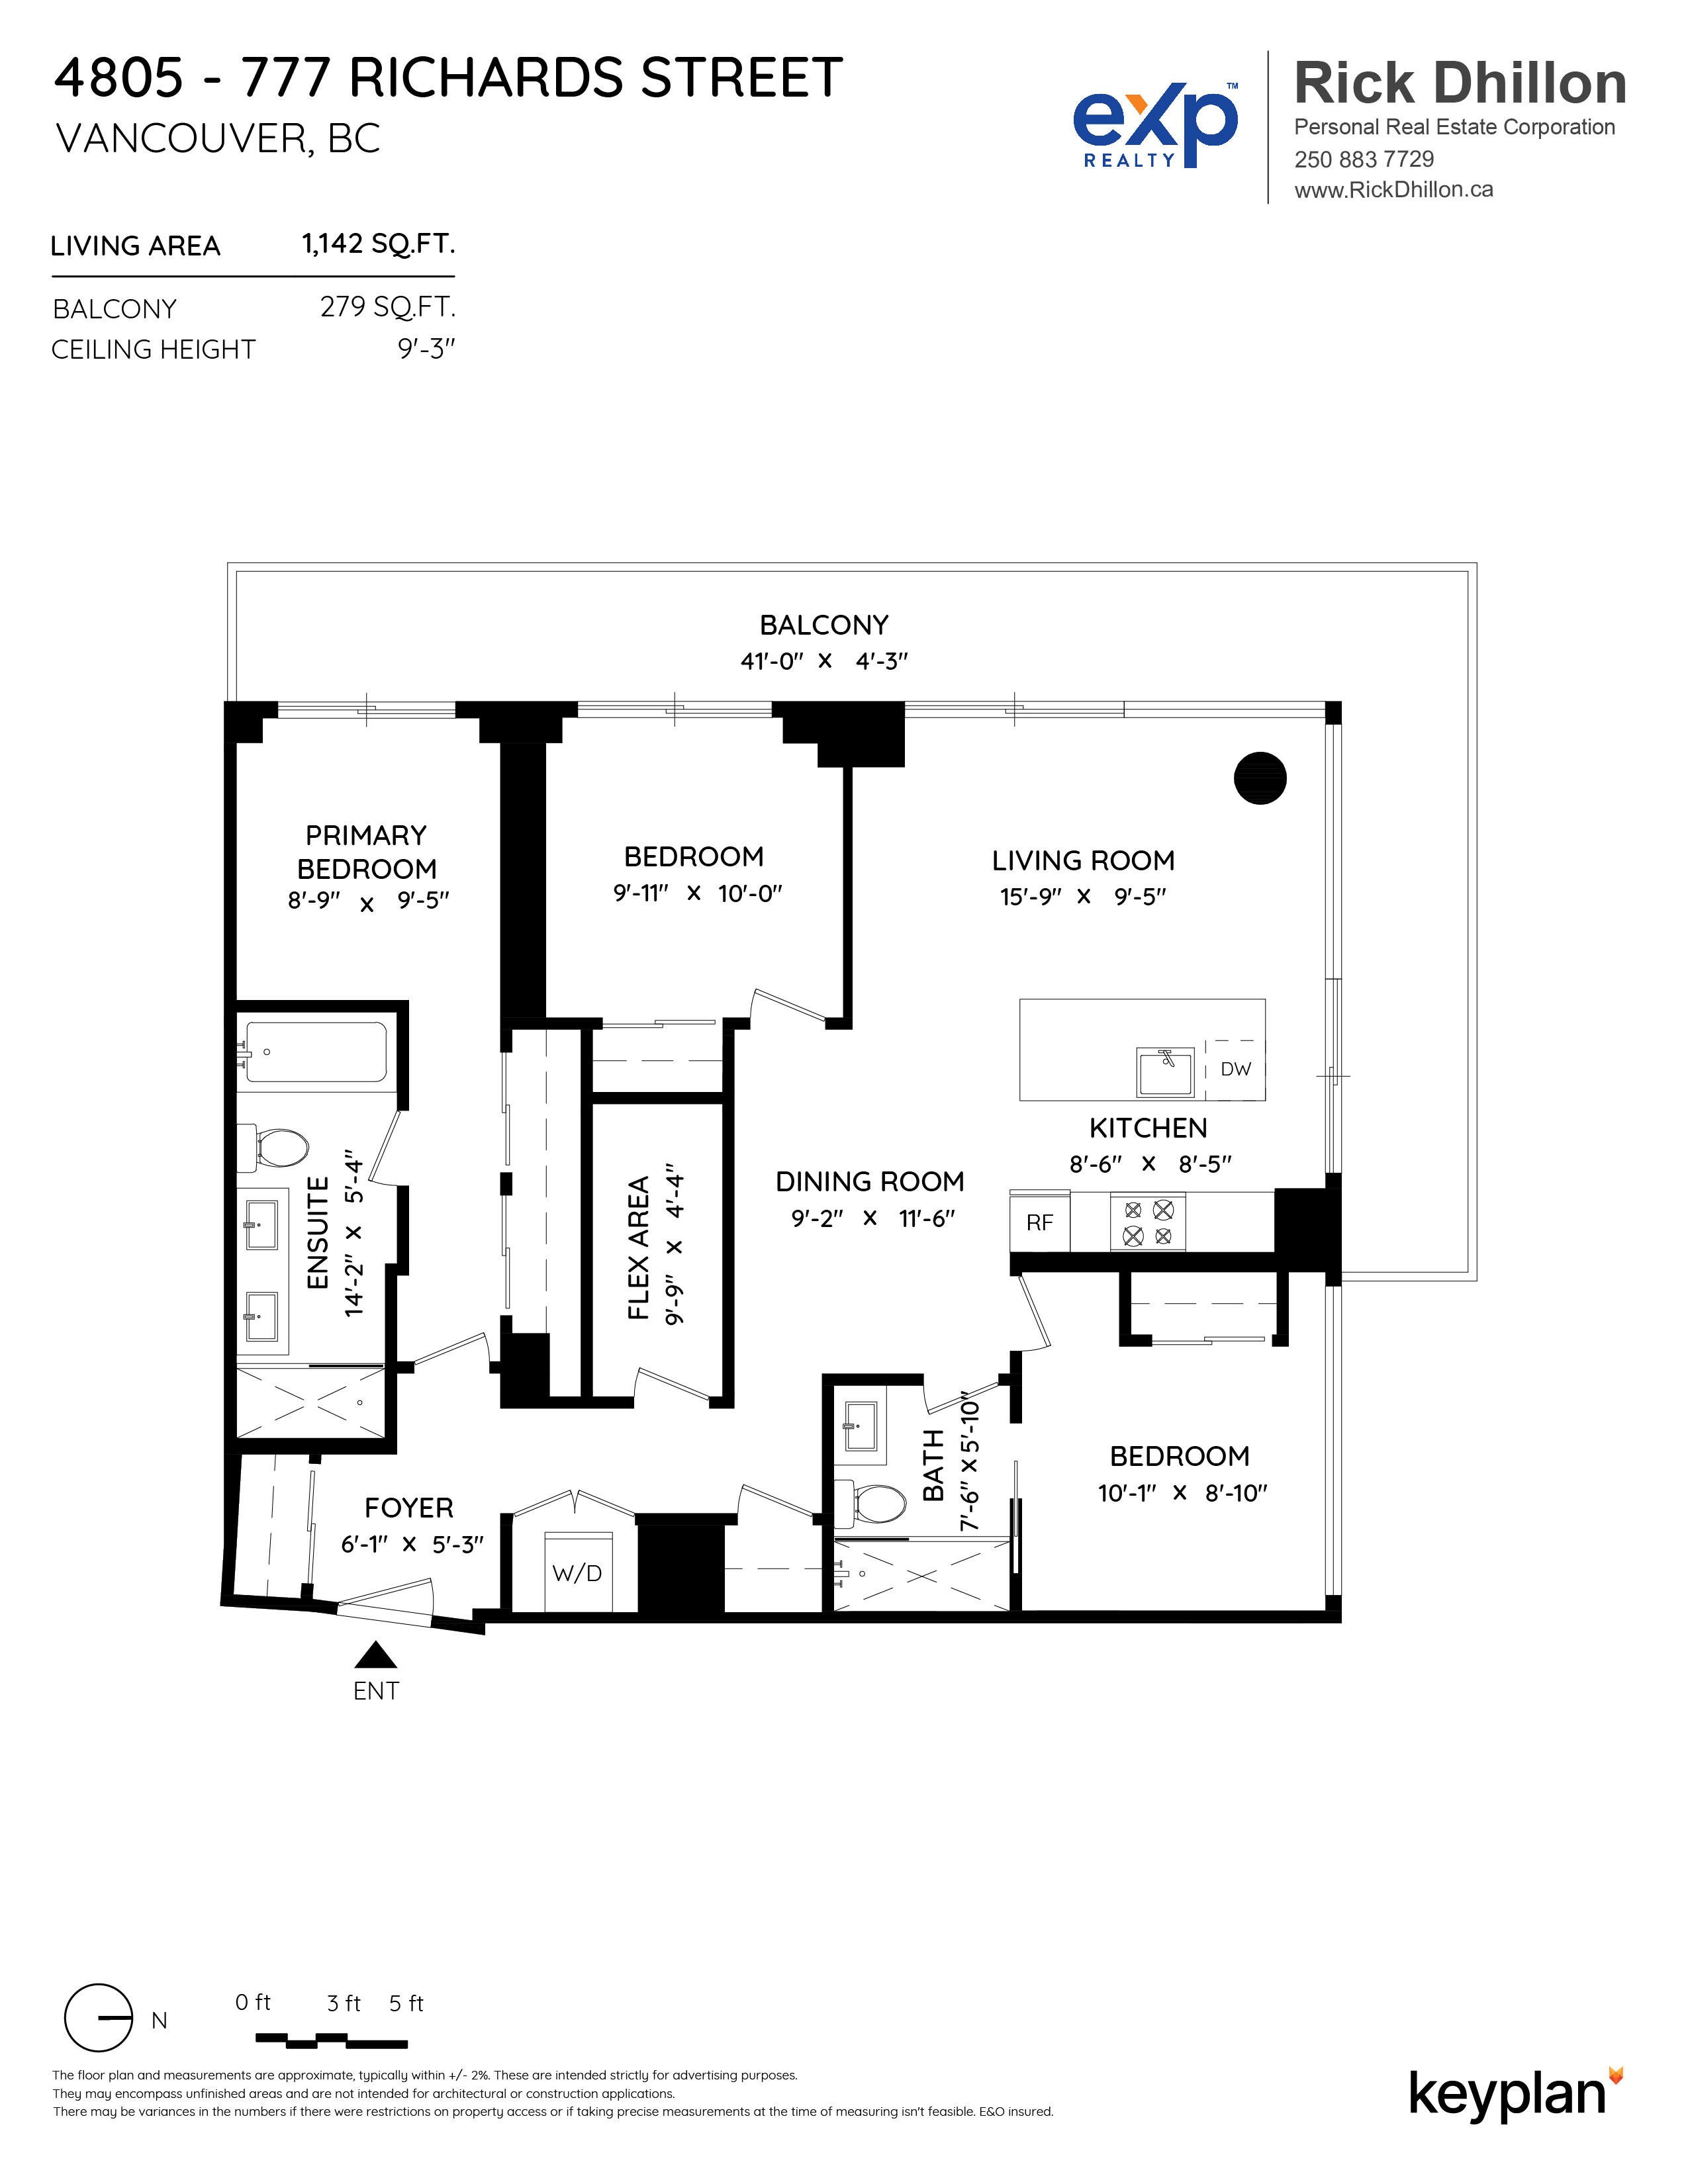 Rick Dhillon - Unit 4805 - 777 Richards Street, Vancouver, BC, Canada | Floor Plan 1